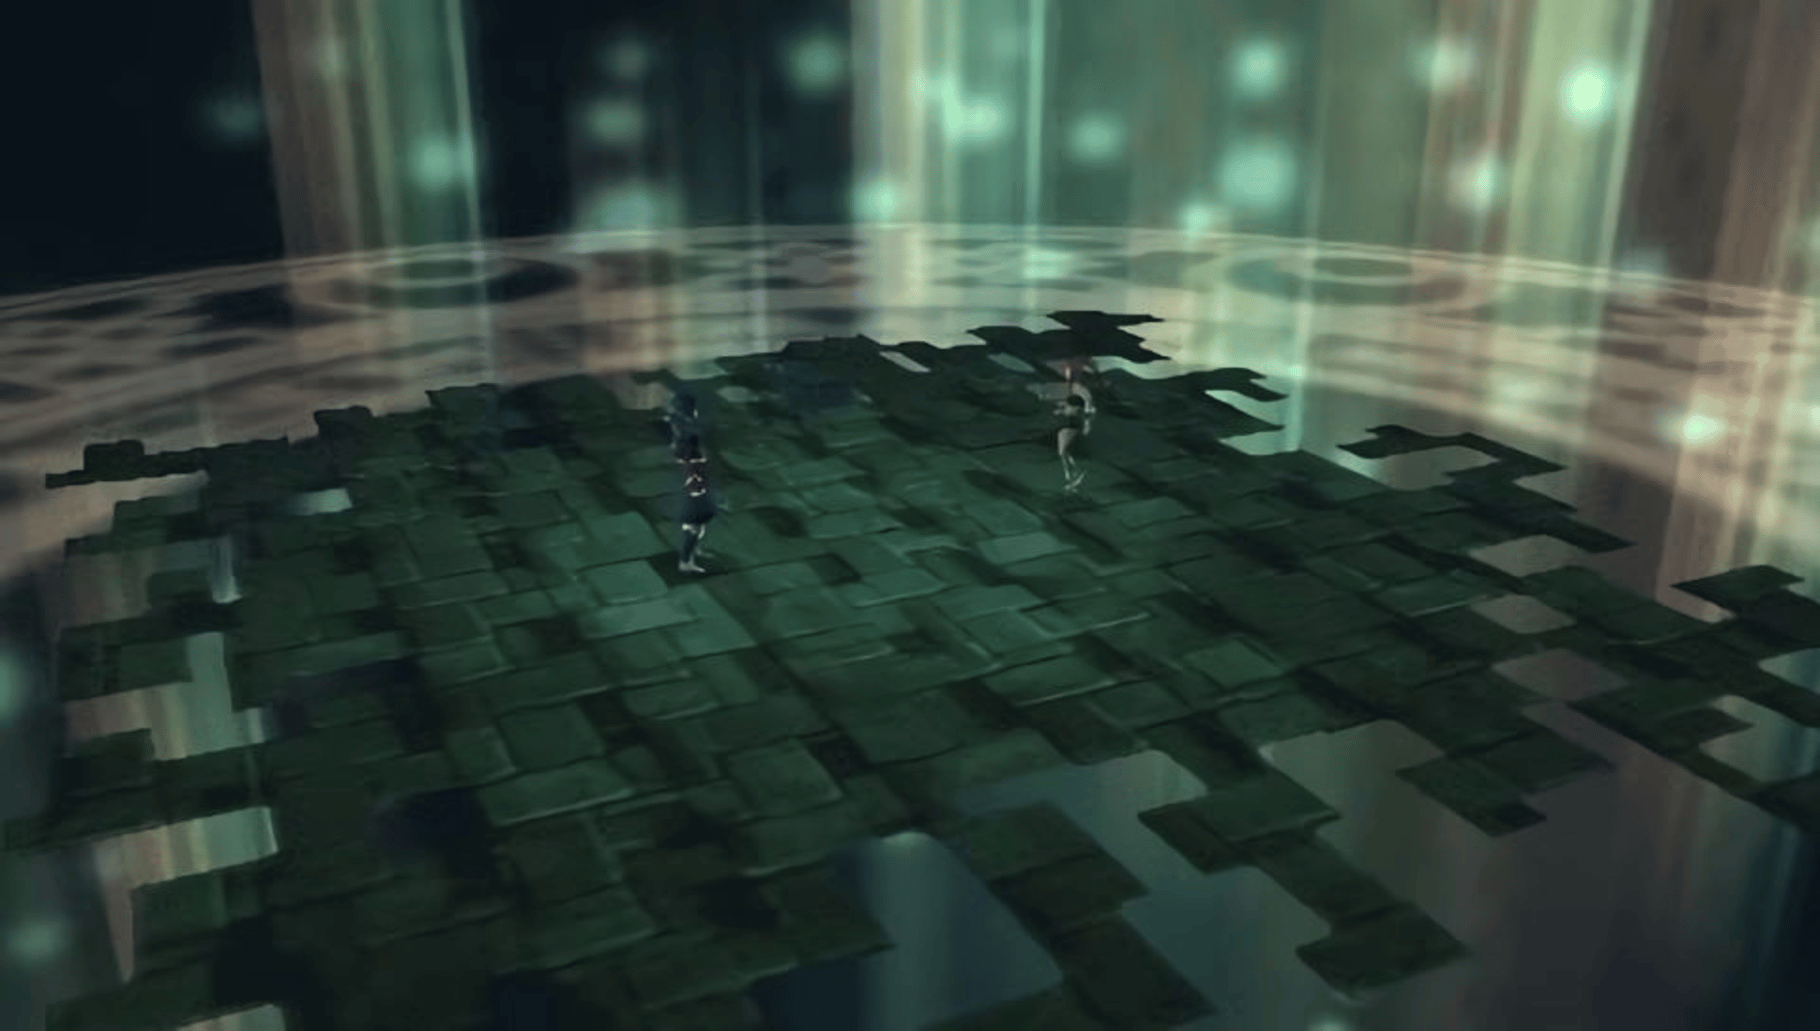 Blade Dancer: Lineage of Light screenshot